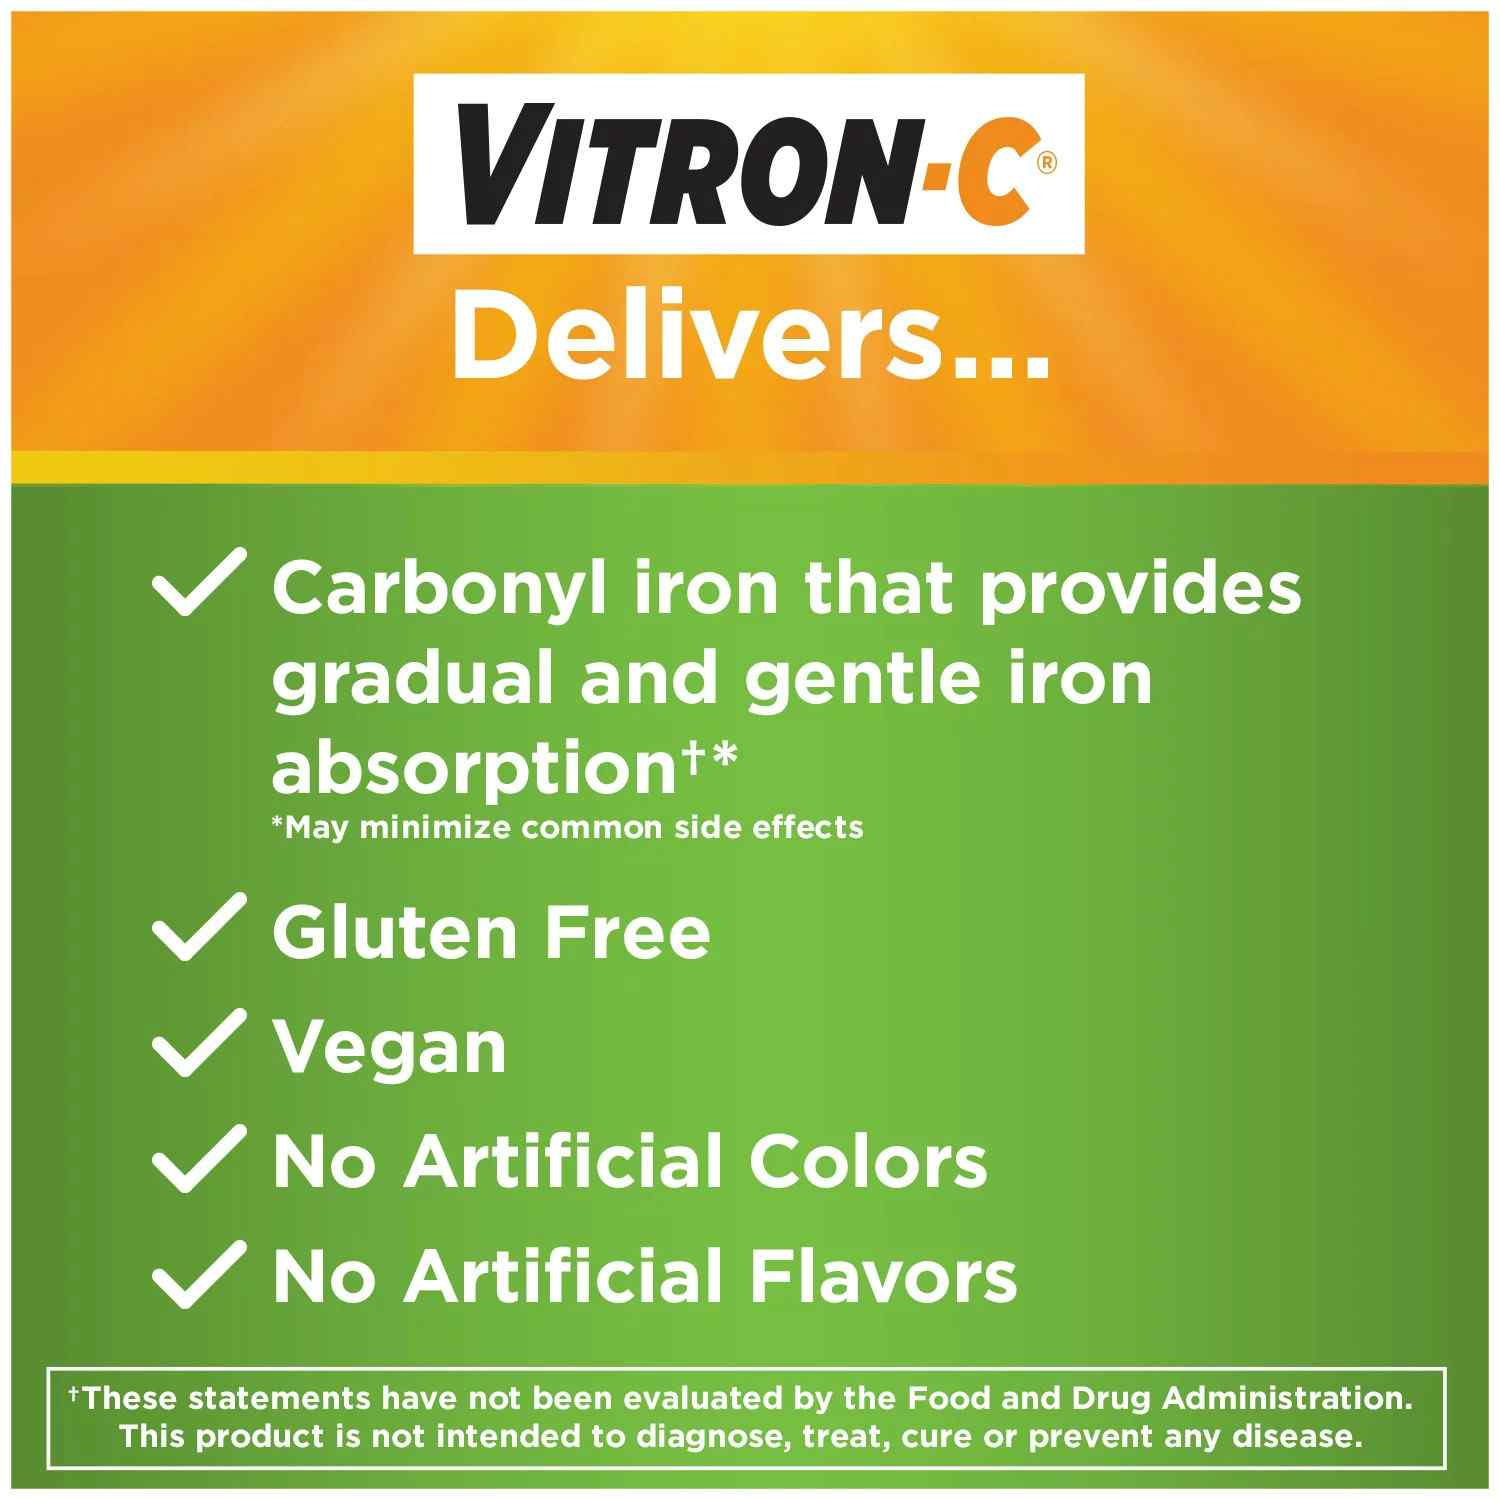 Vitron-C High Potency Iron Dietary Supplement Plus Vitamin C, 125 mg - 65 mg, 60 Tablets, 63736012301, 1 Bottle